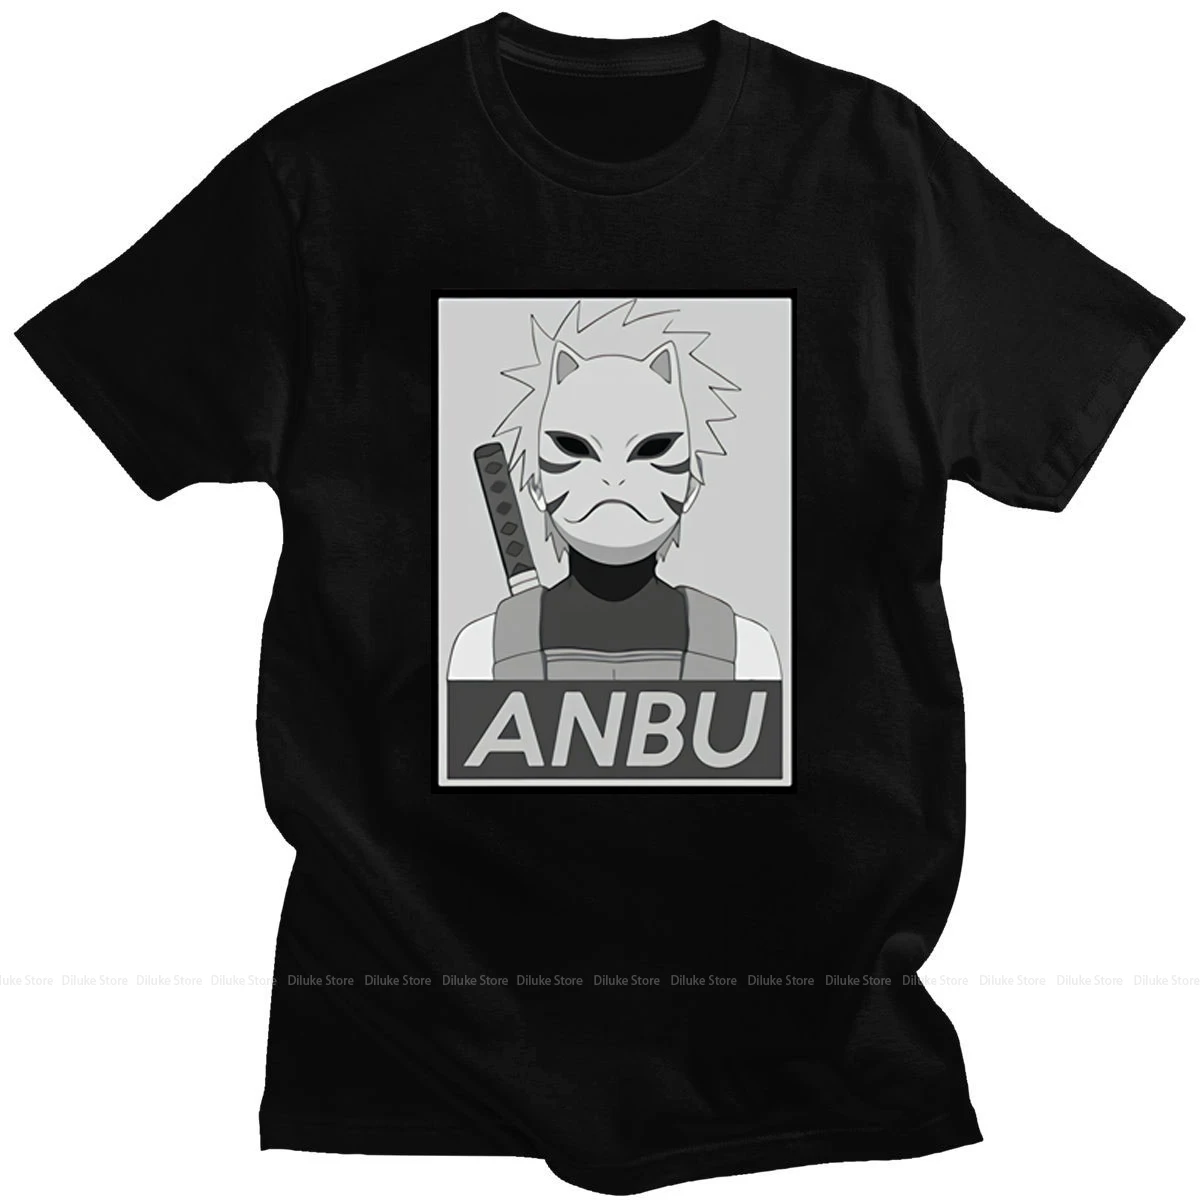 

Anime T-Shirt Summer Short Sleeve 100% Cotton Men Harajuku Cartoon ANBU Kakashi Tops2021 The New Casual Loose T-shirt